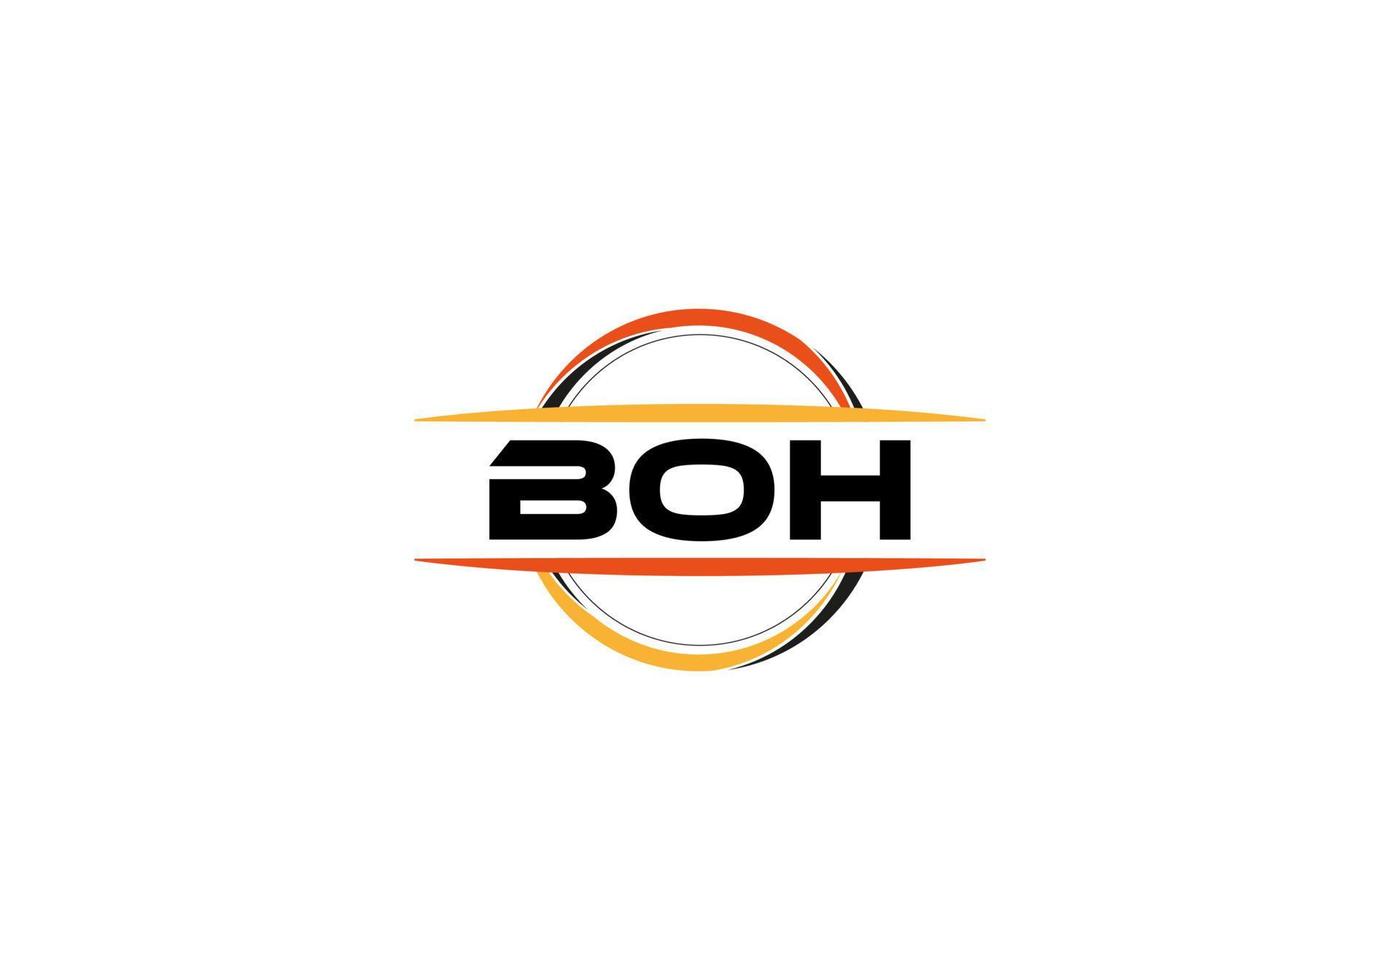 BOH letter royalty ellipse shape logo. BOH brush art logo. BOH logo for a company, business, and commercial use. vector